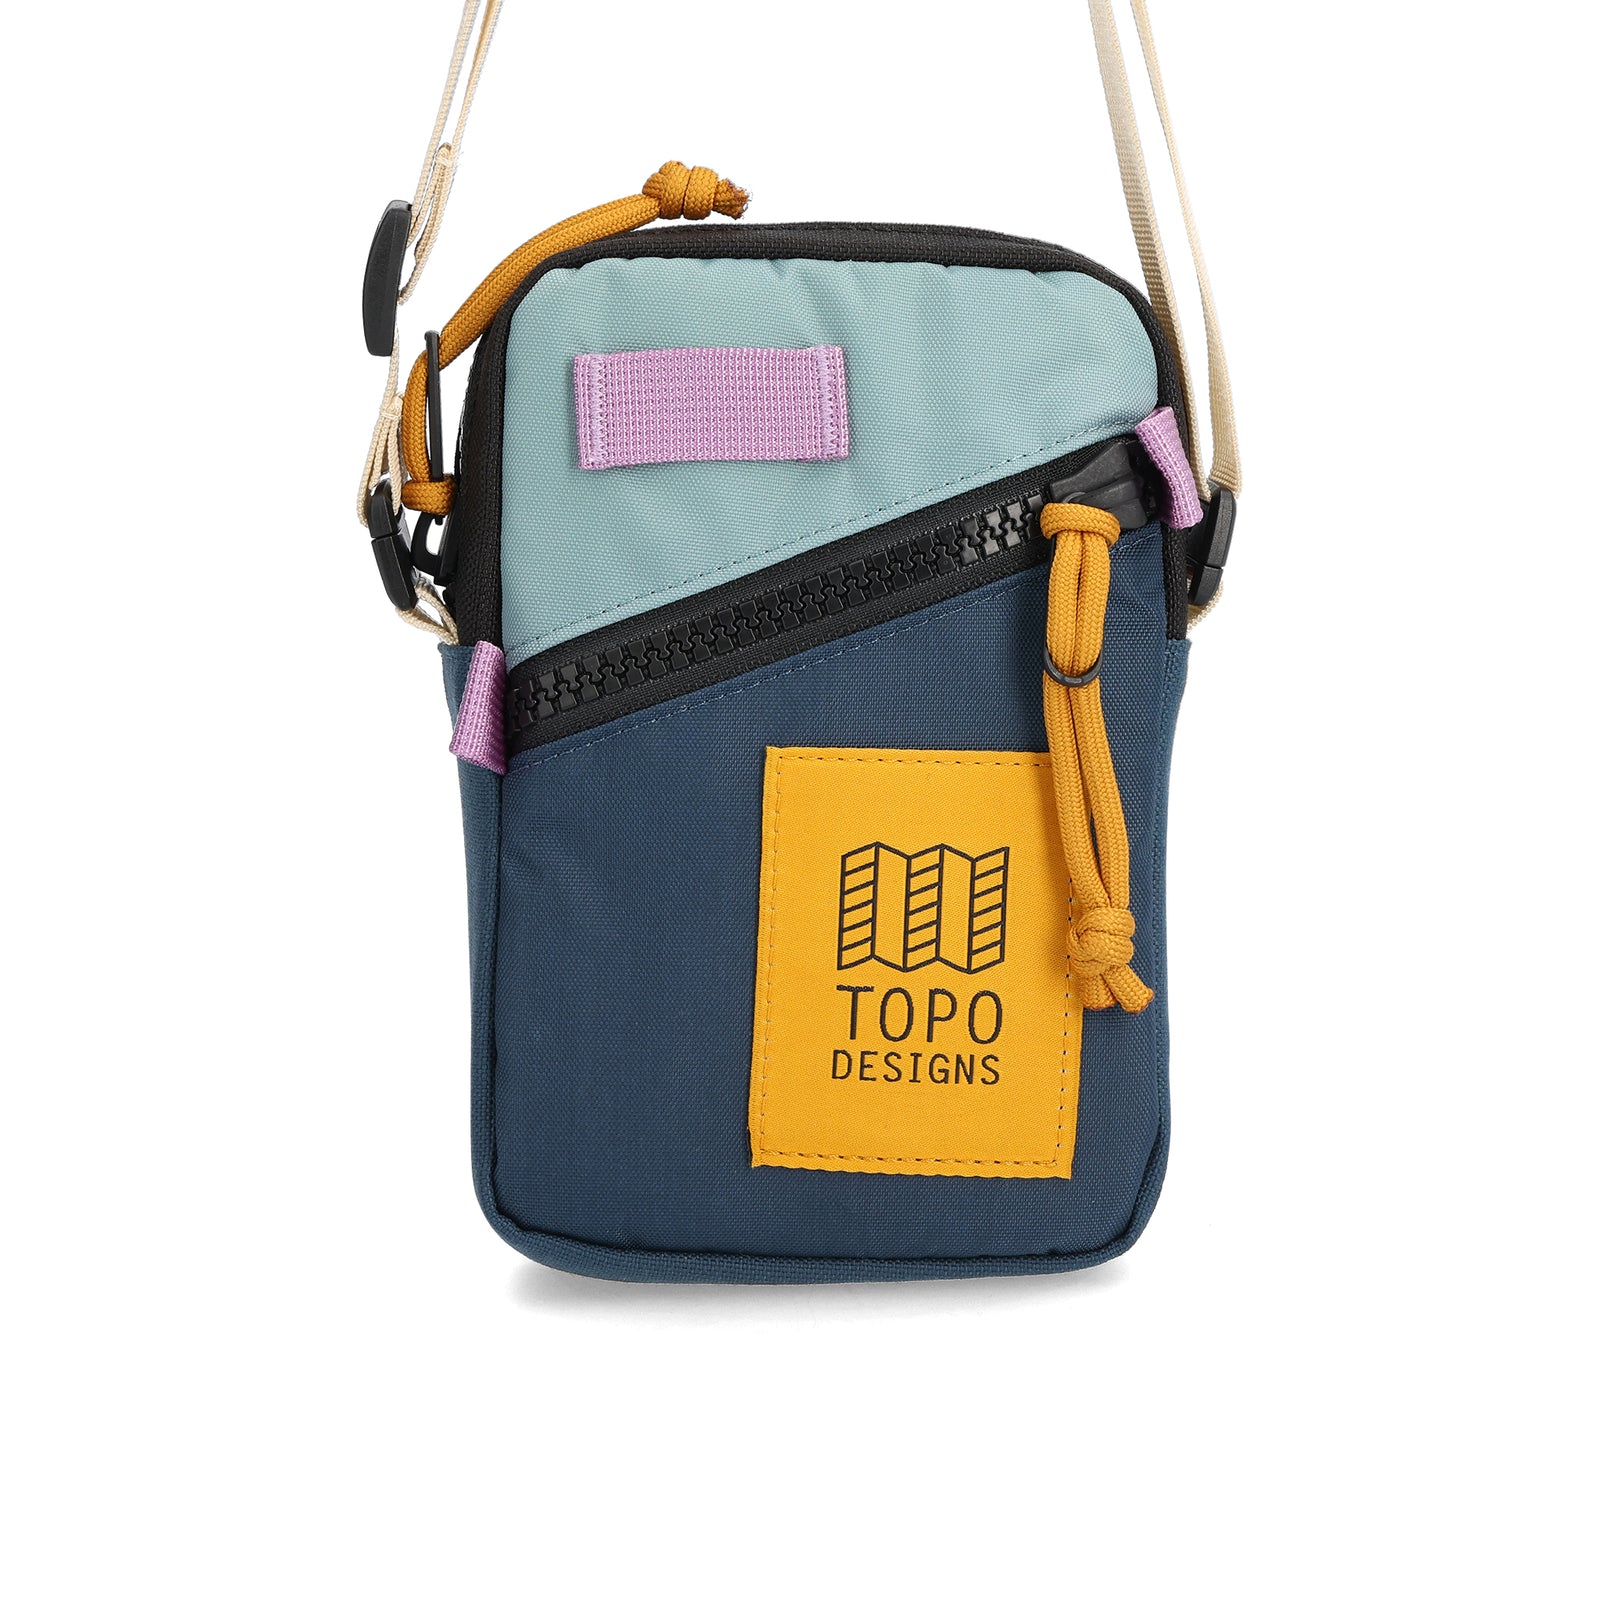 Front View of Topo Designs Mini Shoulder Bag in "Pond Blue / Sage"